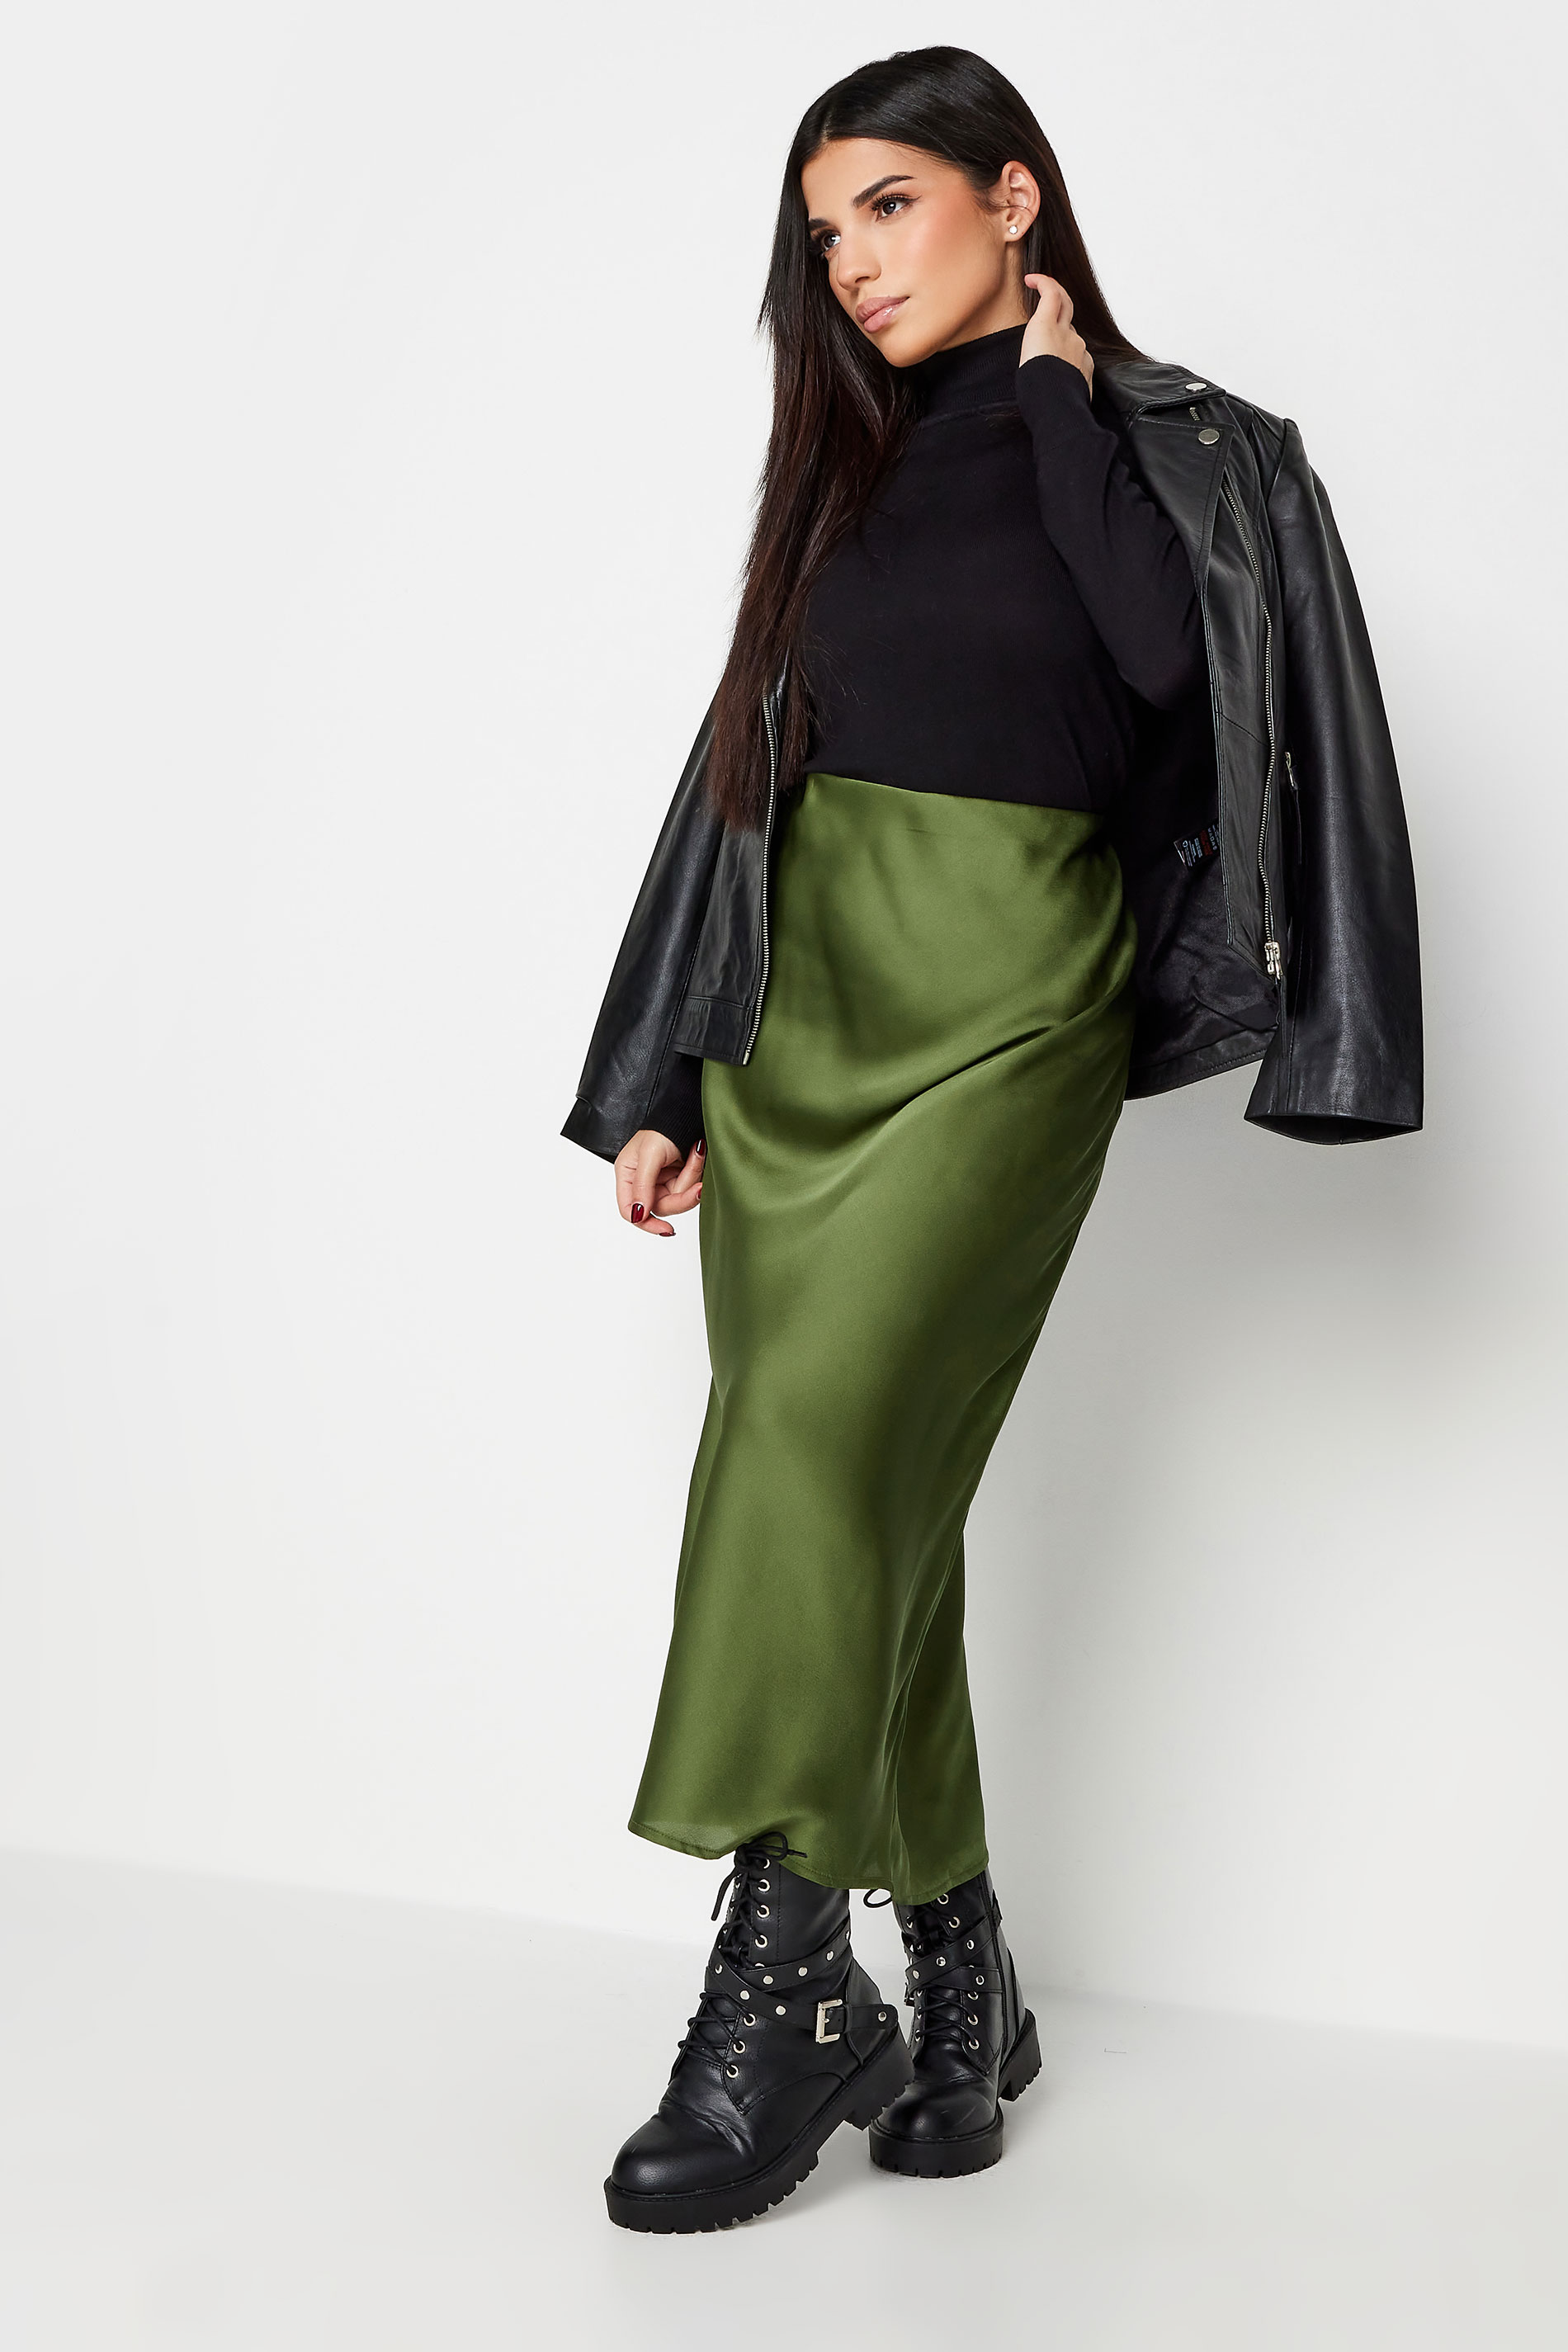 PixieGirl Petite Olive Green Satin Midaxi Skirt | PixieGirl  3